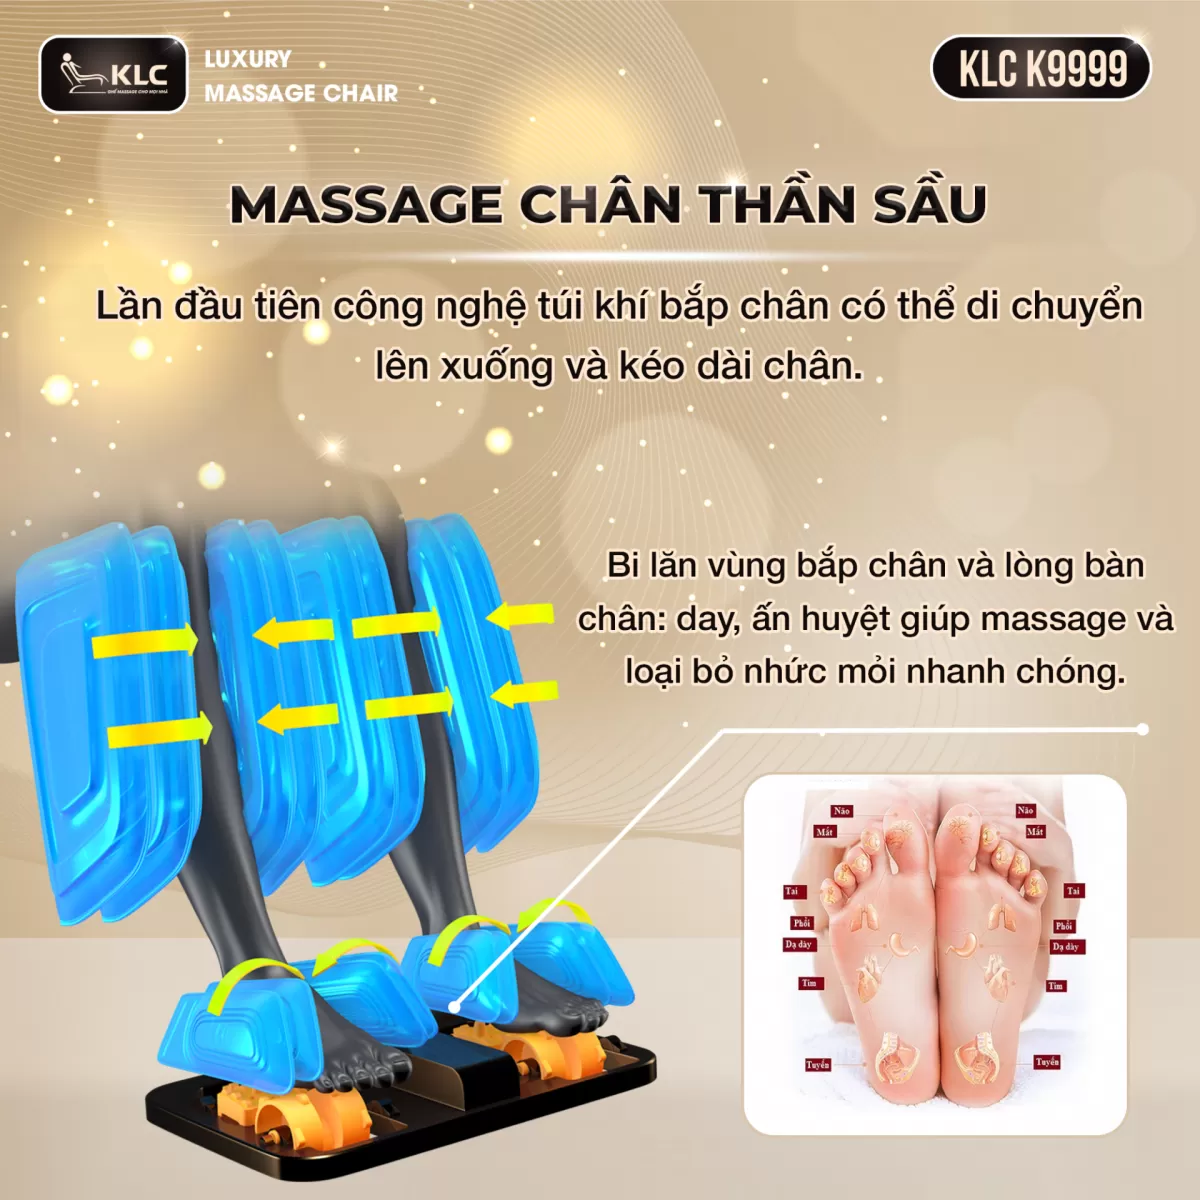 Massage chân chuyên sâu của Ghế Massage KLC K9999